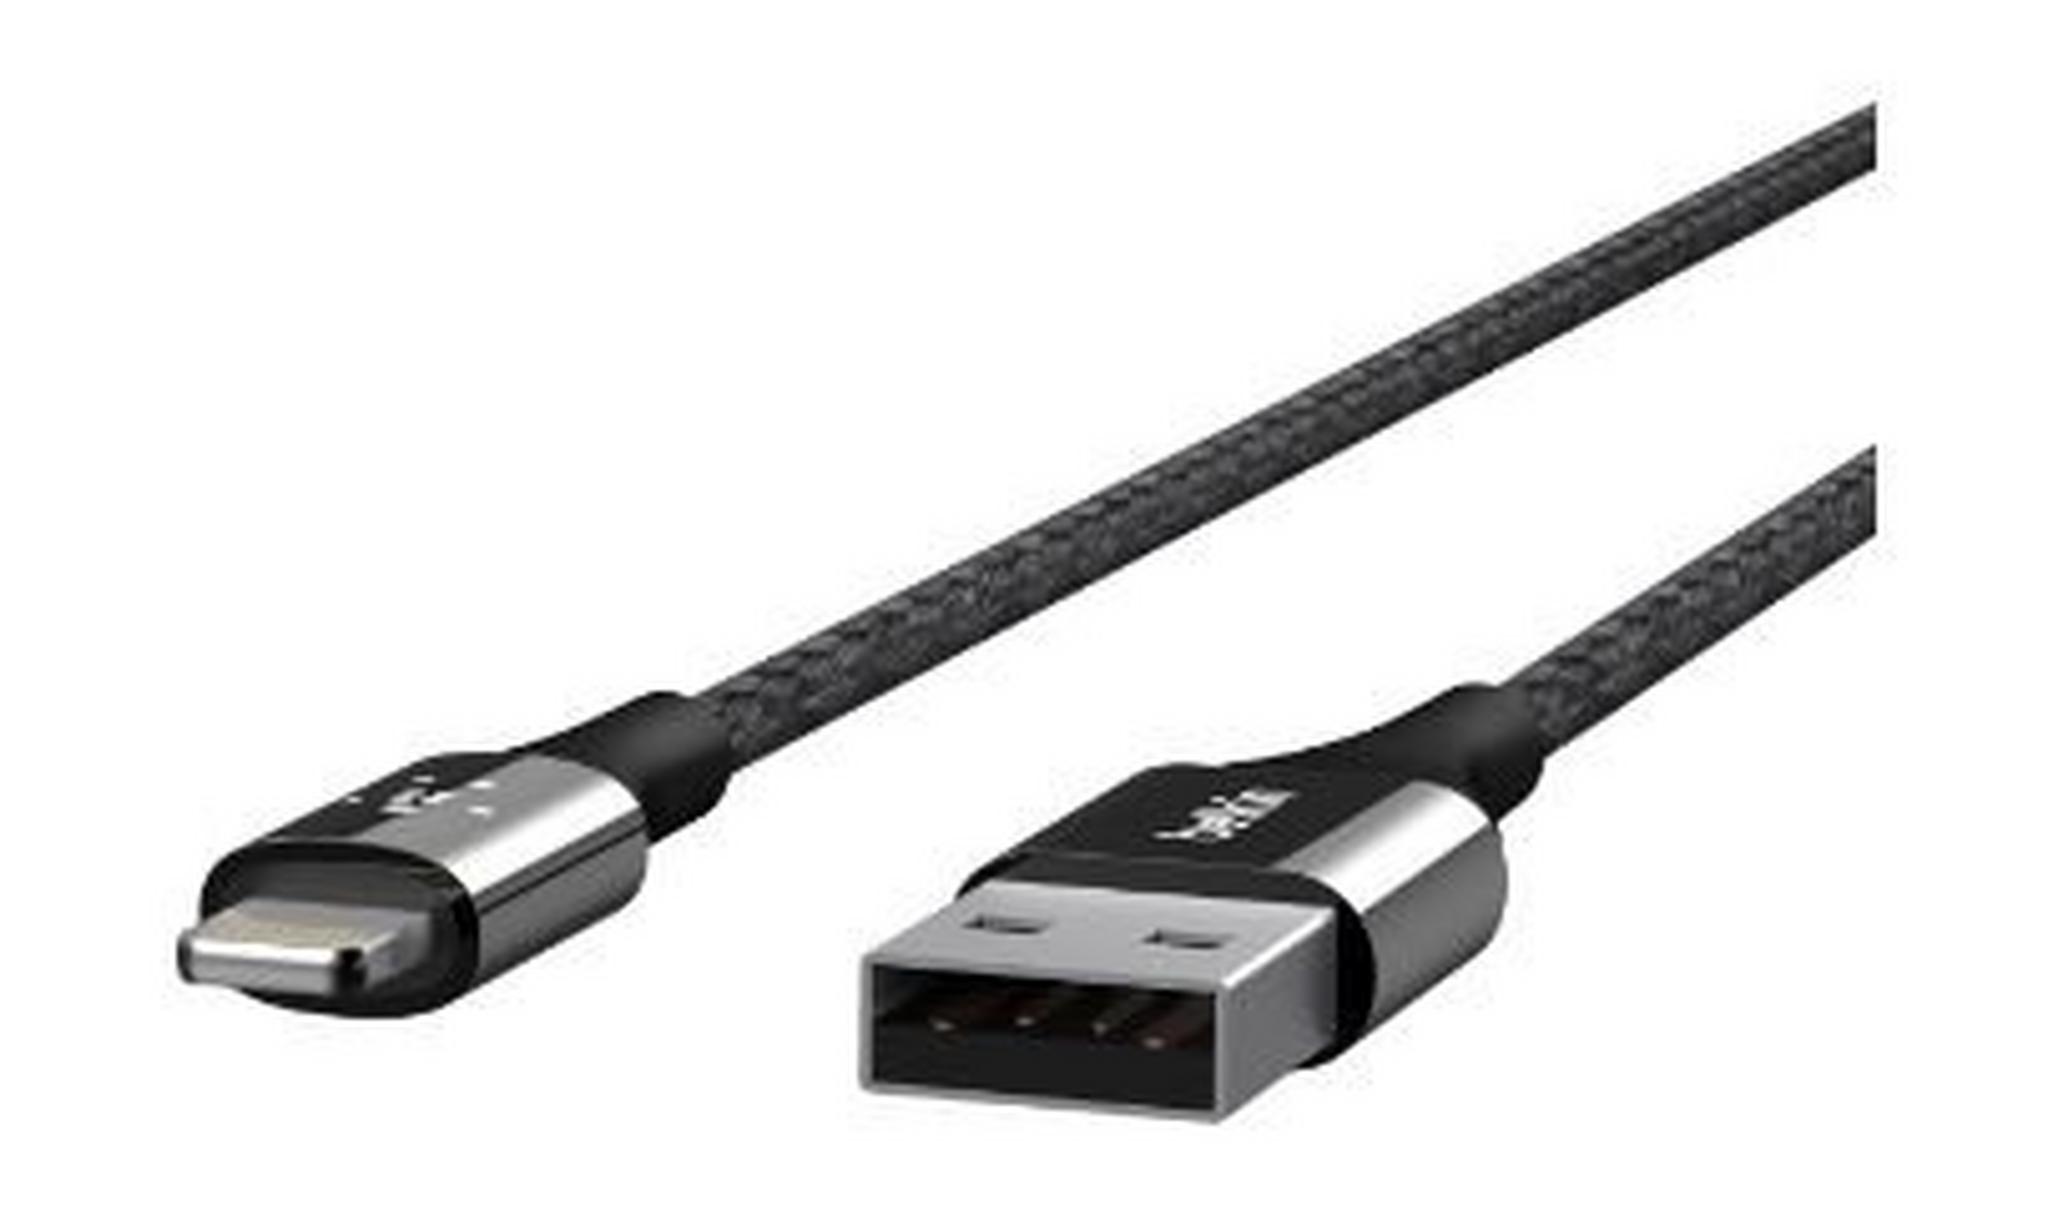 Belkin 1.2M Premium DuraTek Lightning to USB Cable – Black